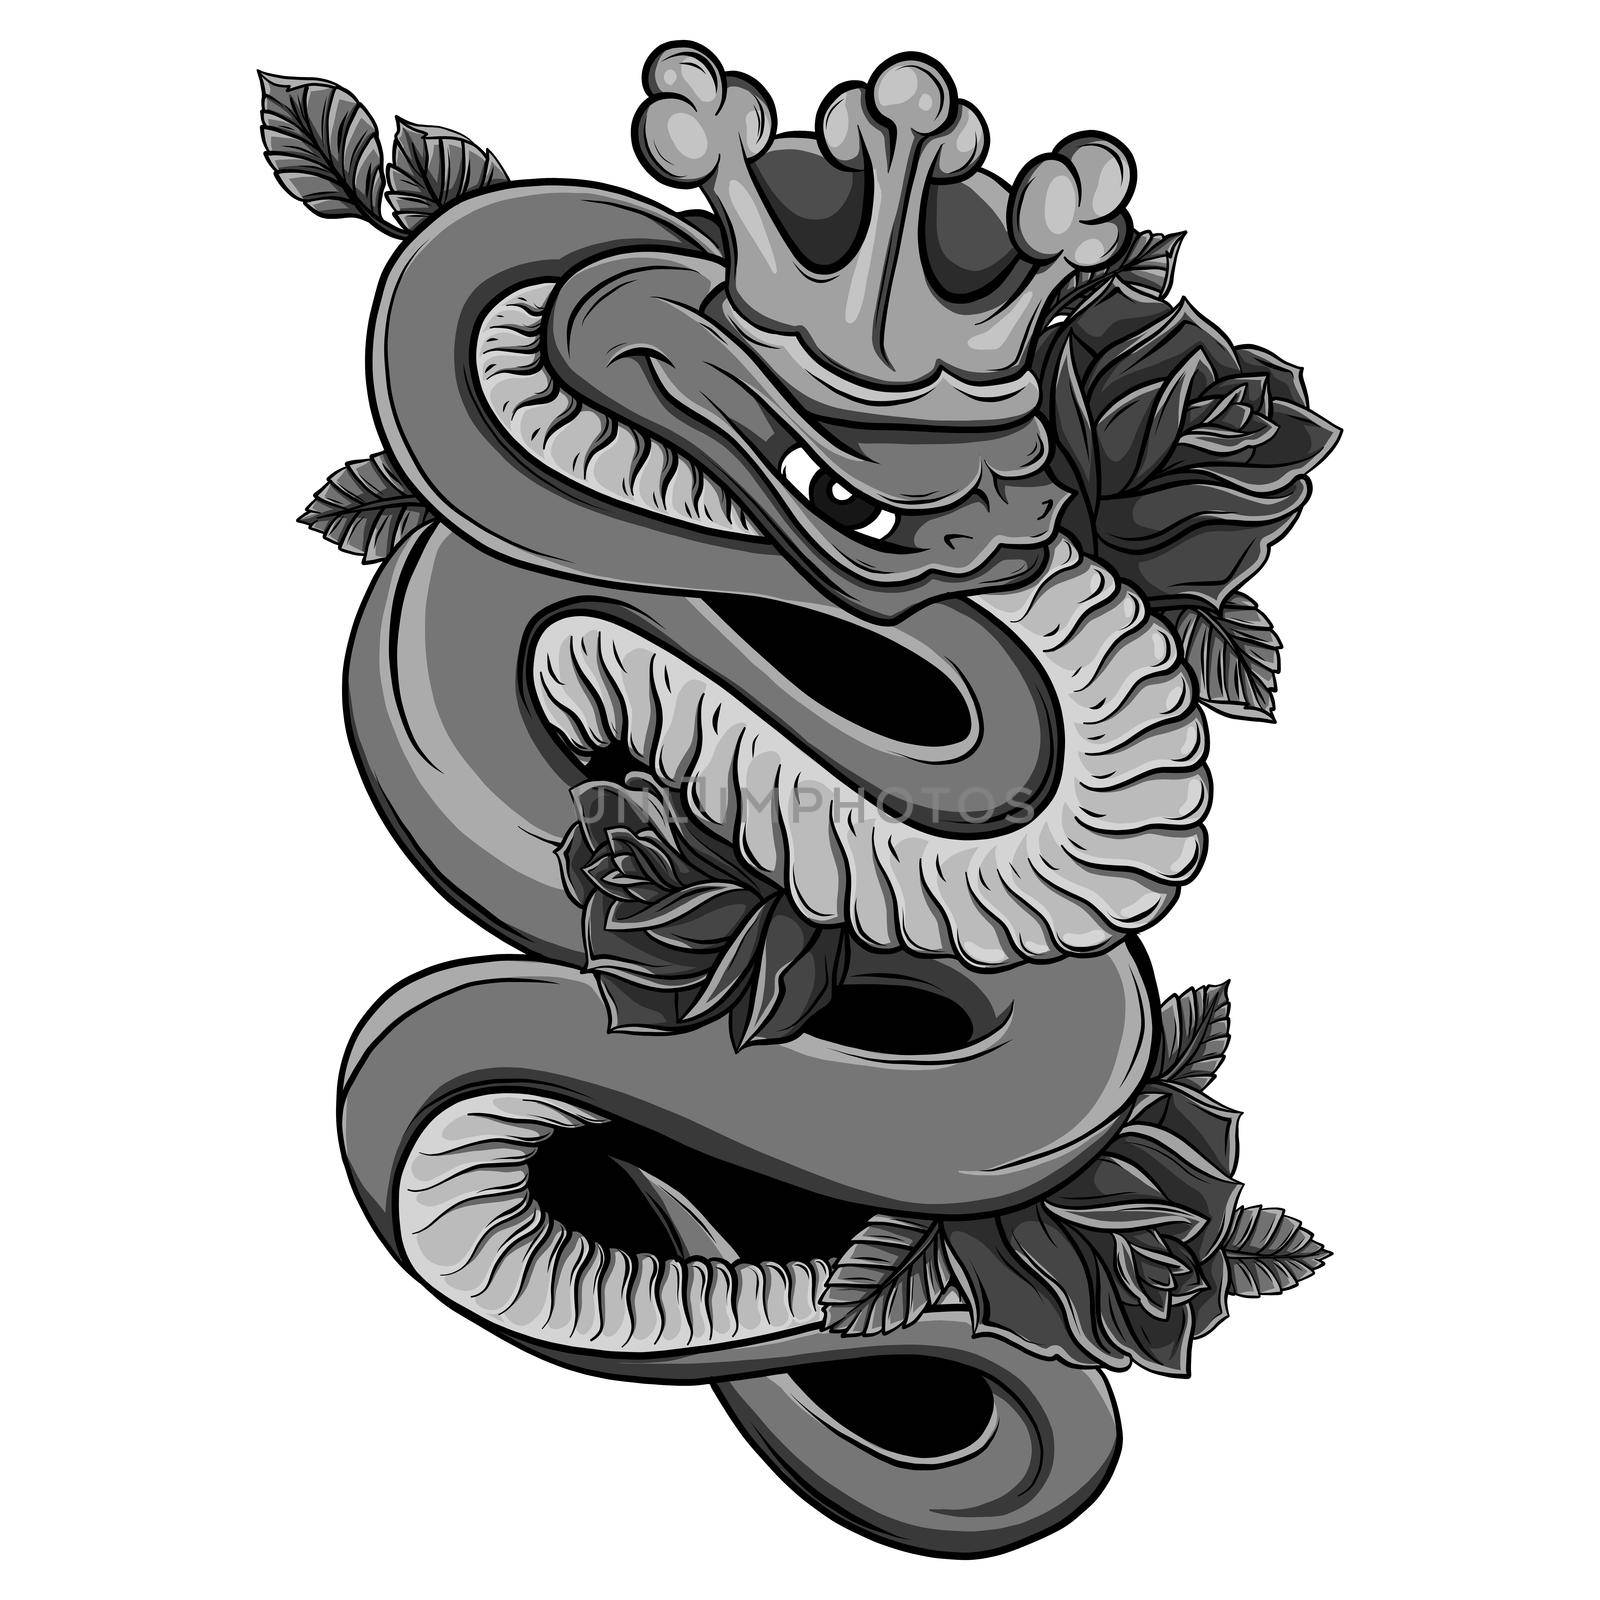 Viper snake illustration. Ink technique, good for poster, sticker, tee shirt design. by dean